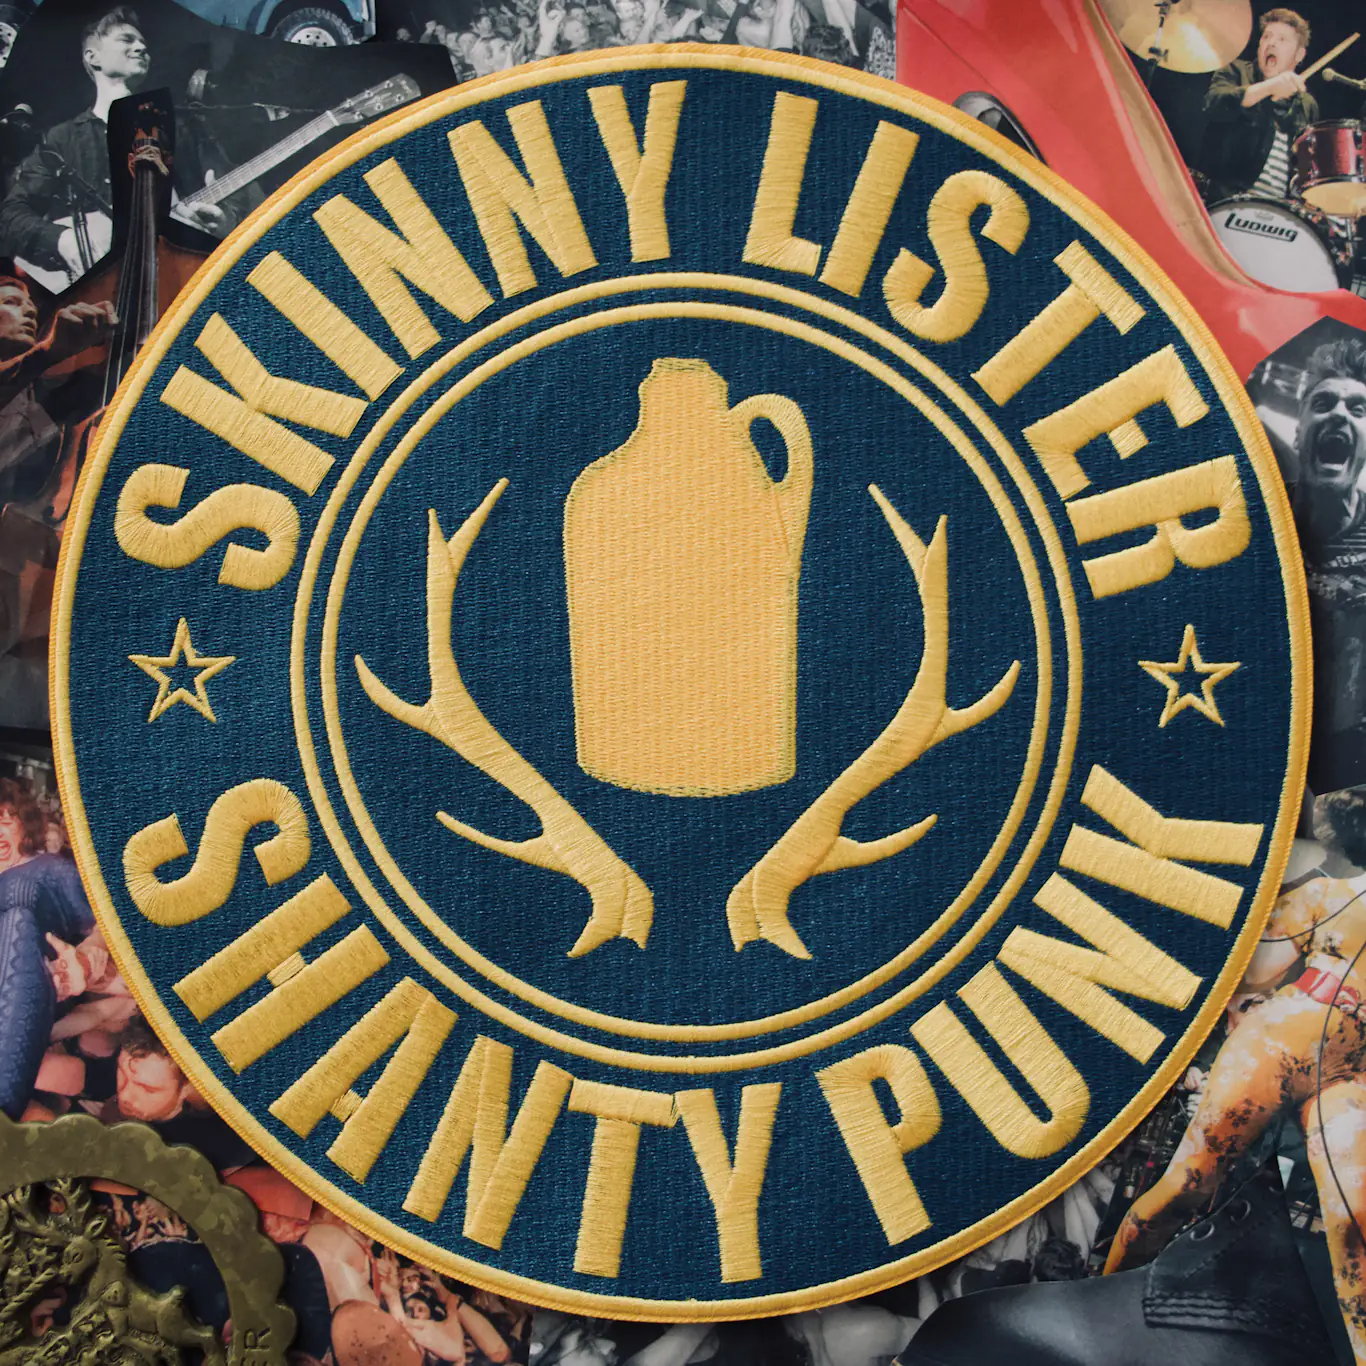 ALBUM REVIEW: Skinny Lister – Shanty Punk